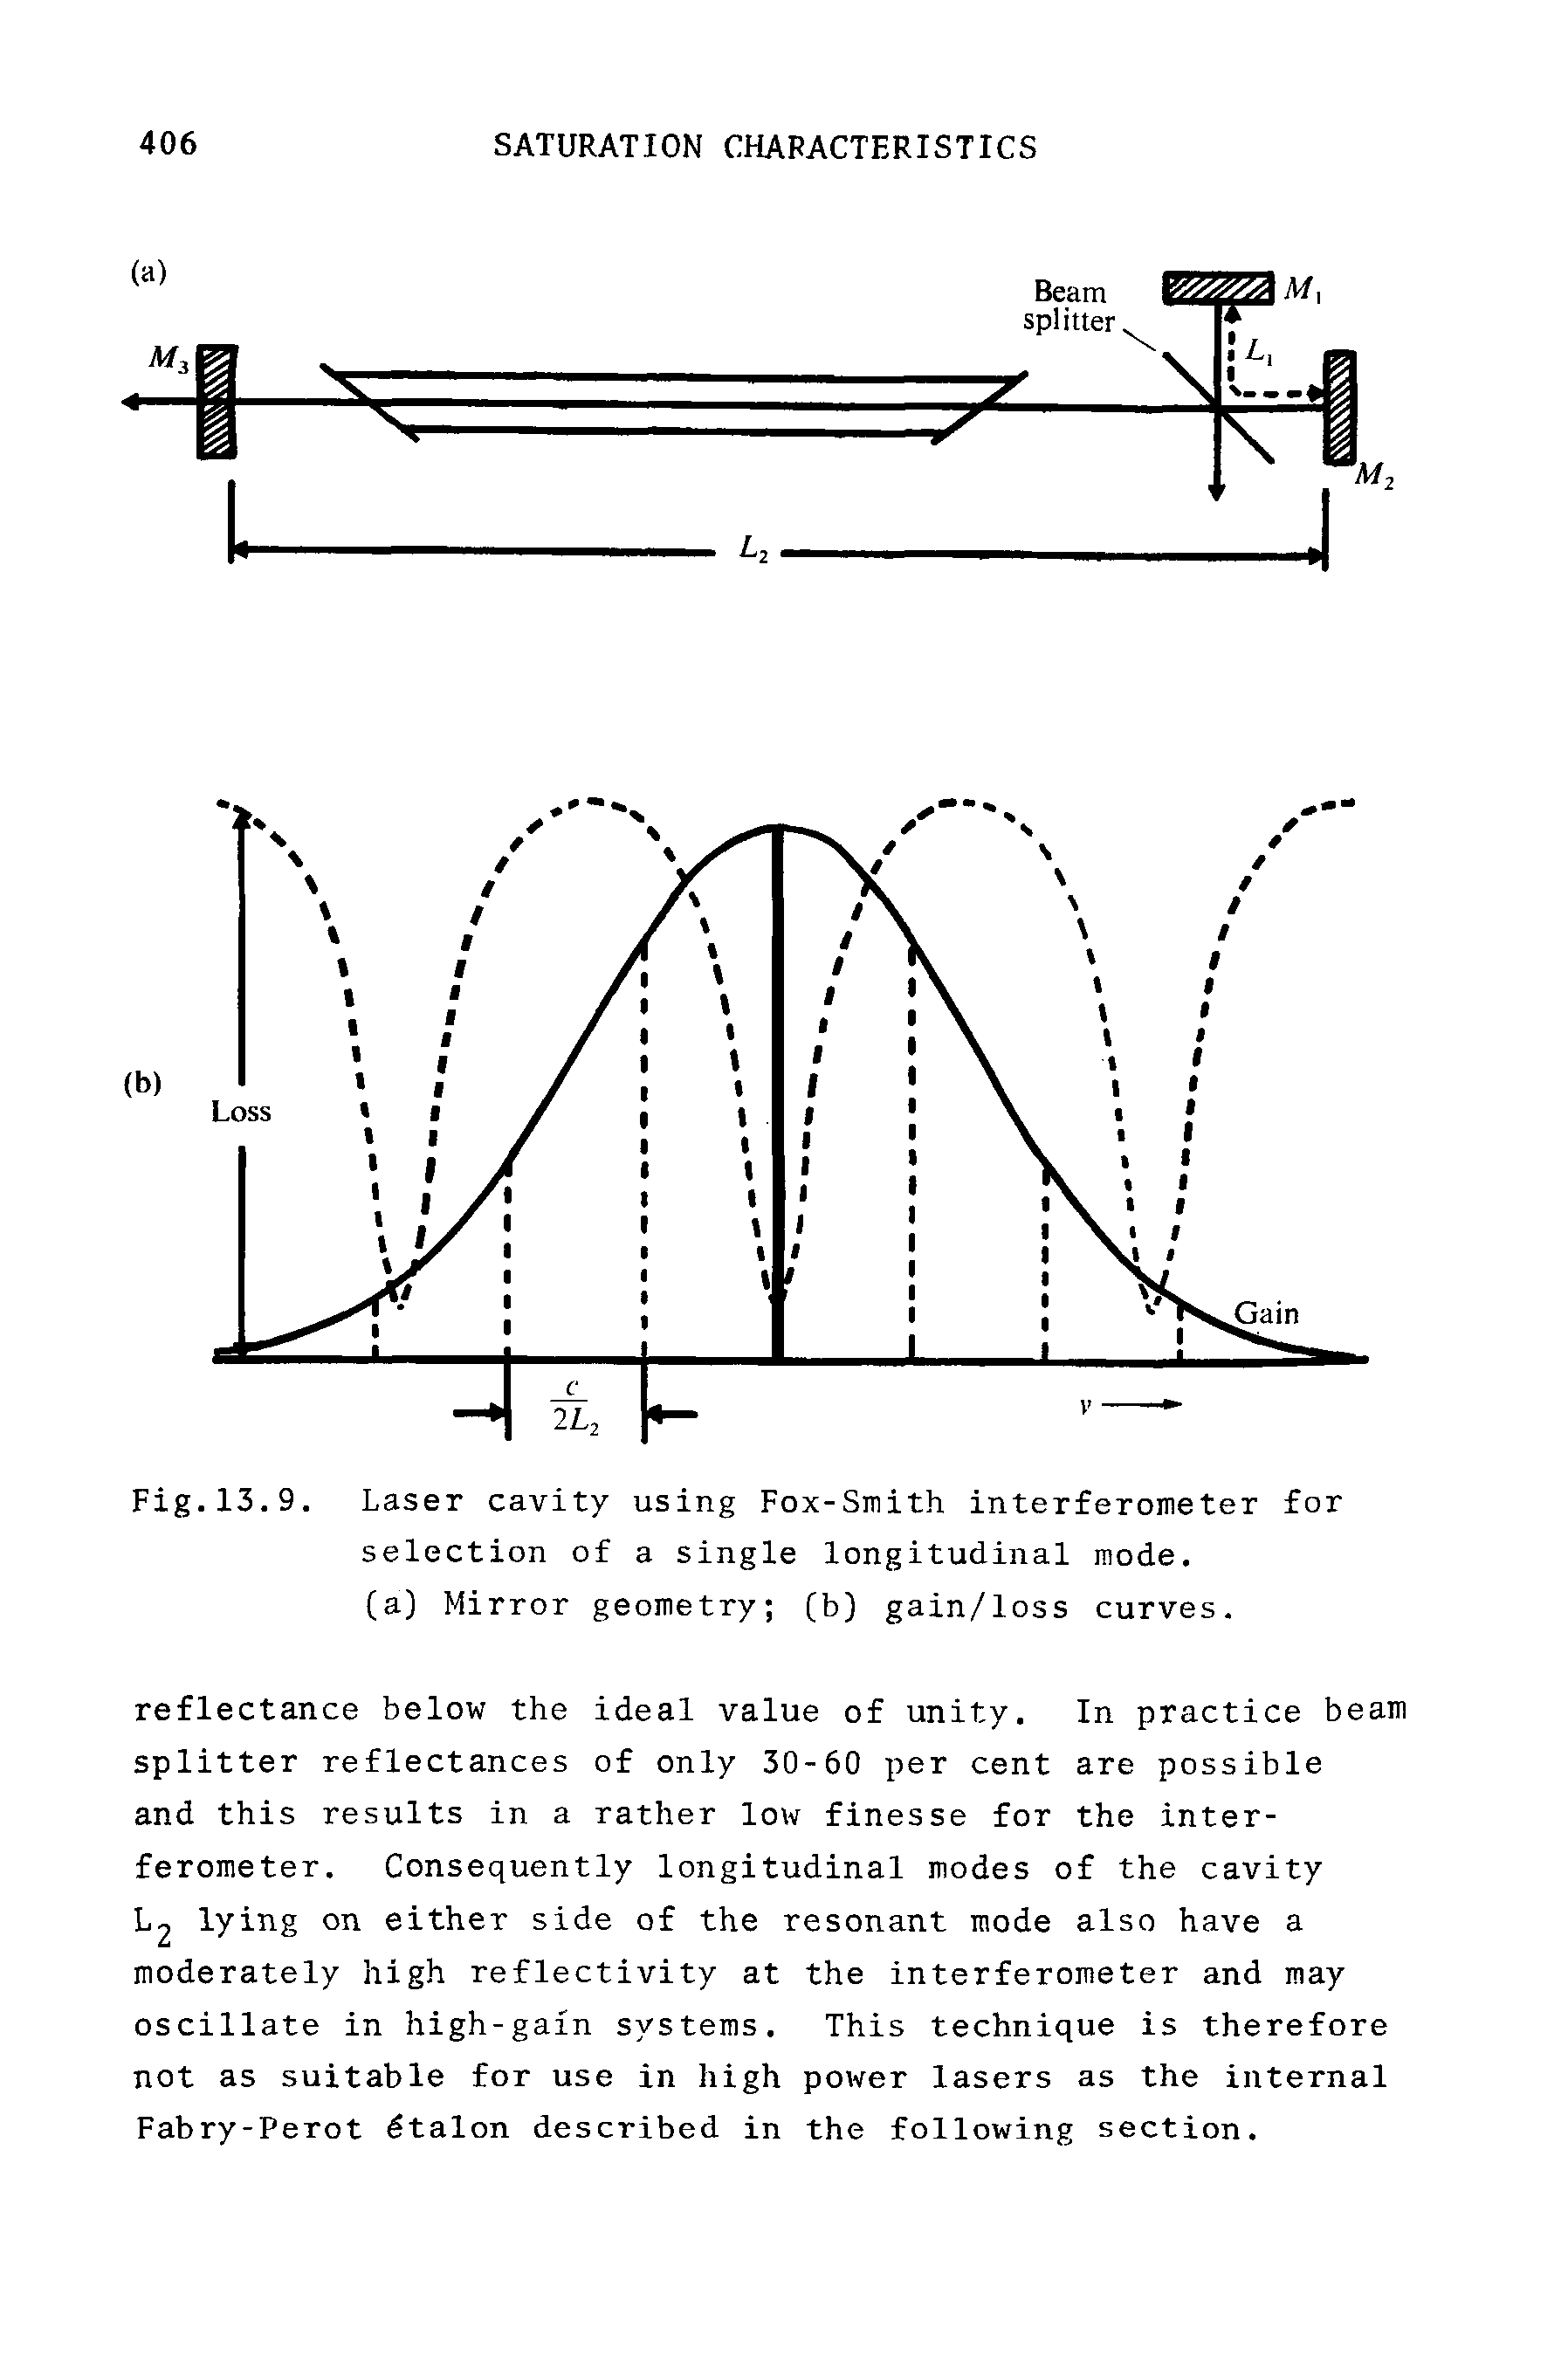 Fig.13.9. Laser cavity using Fox-Smith interferometer for selection of a single longitudinal mode.